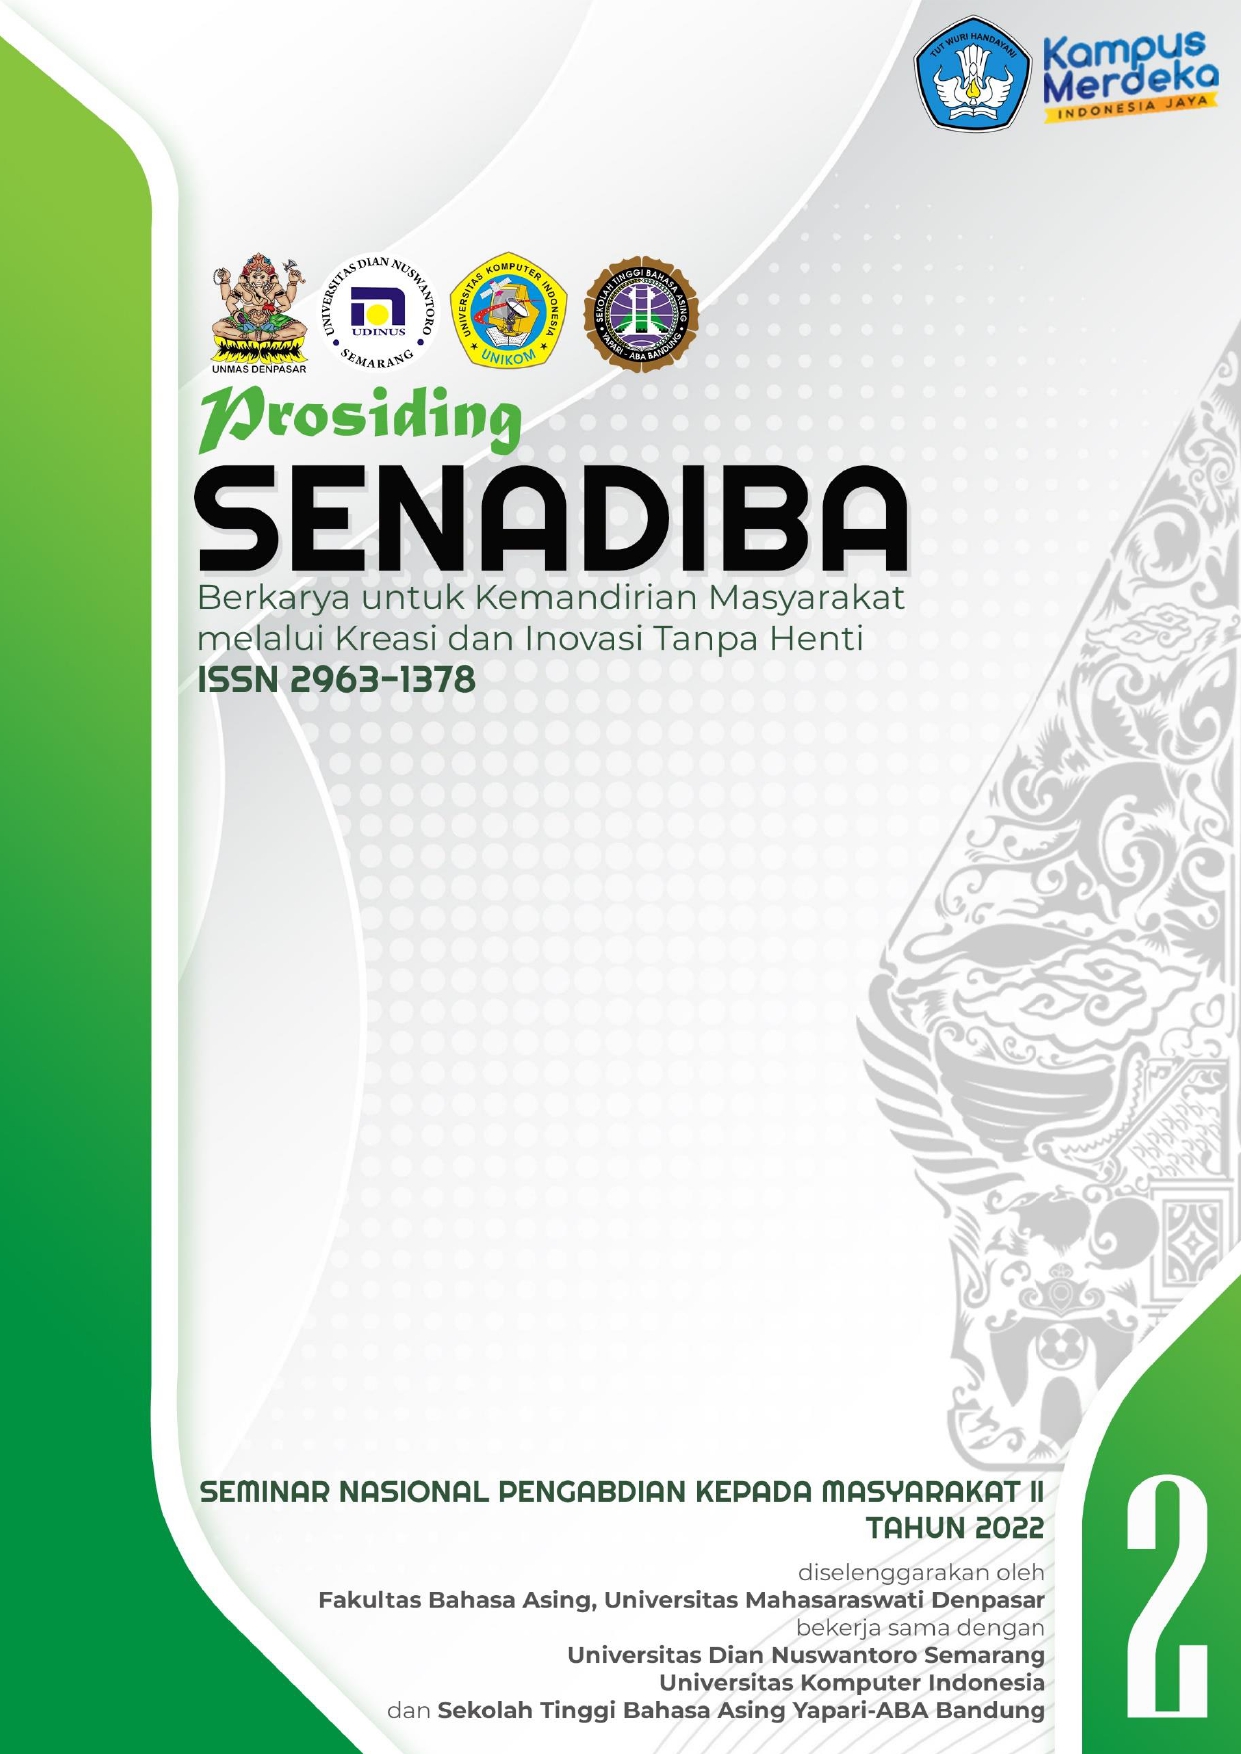 					View 2022: PROSIDING SENADIBA 2022
				